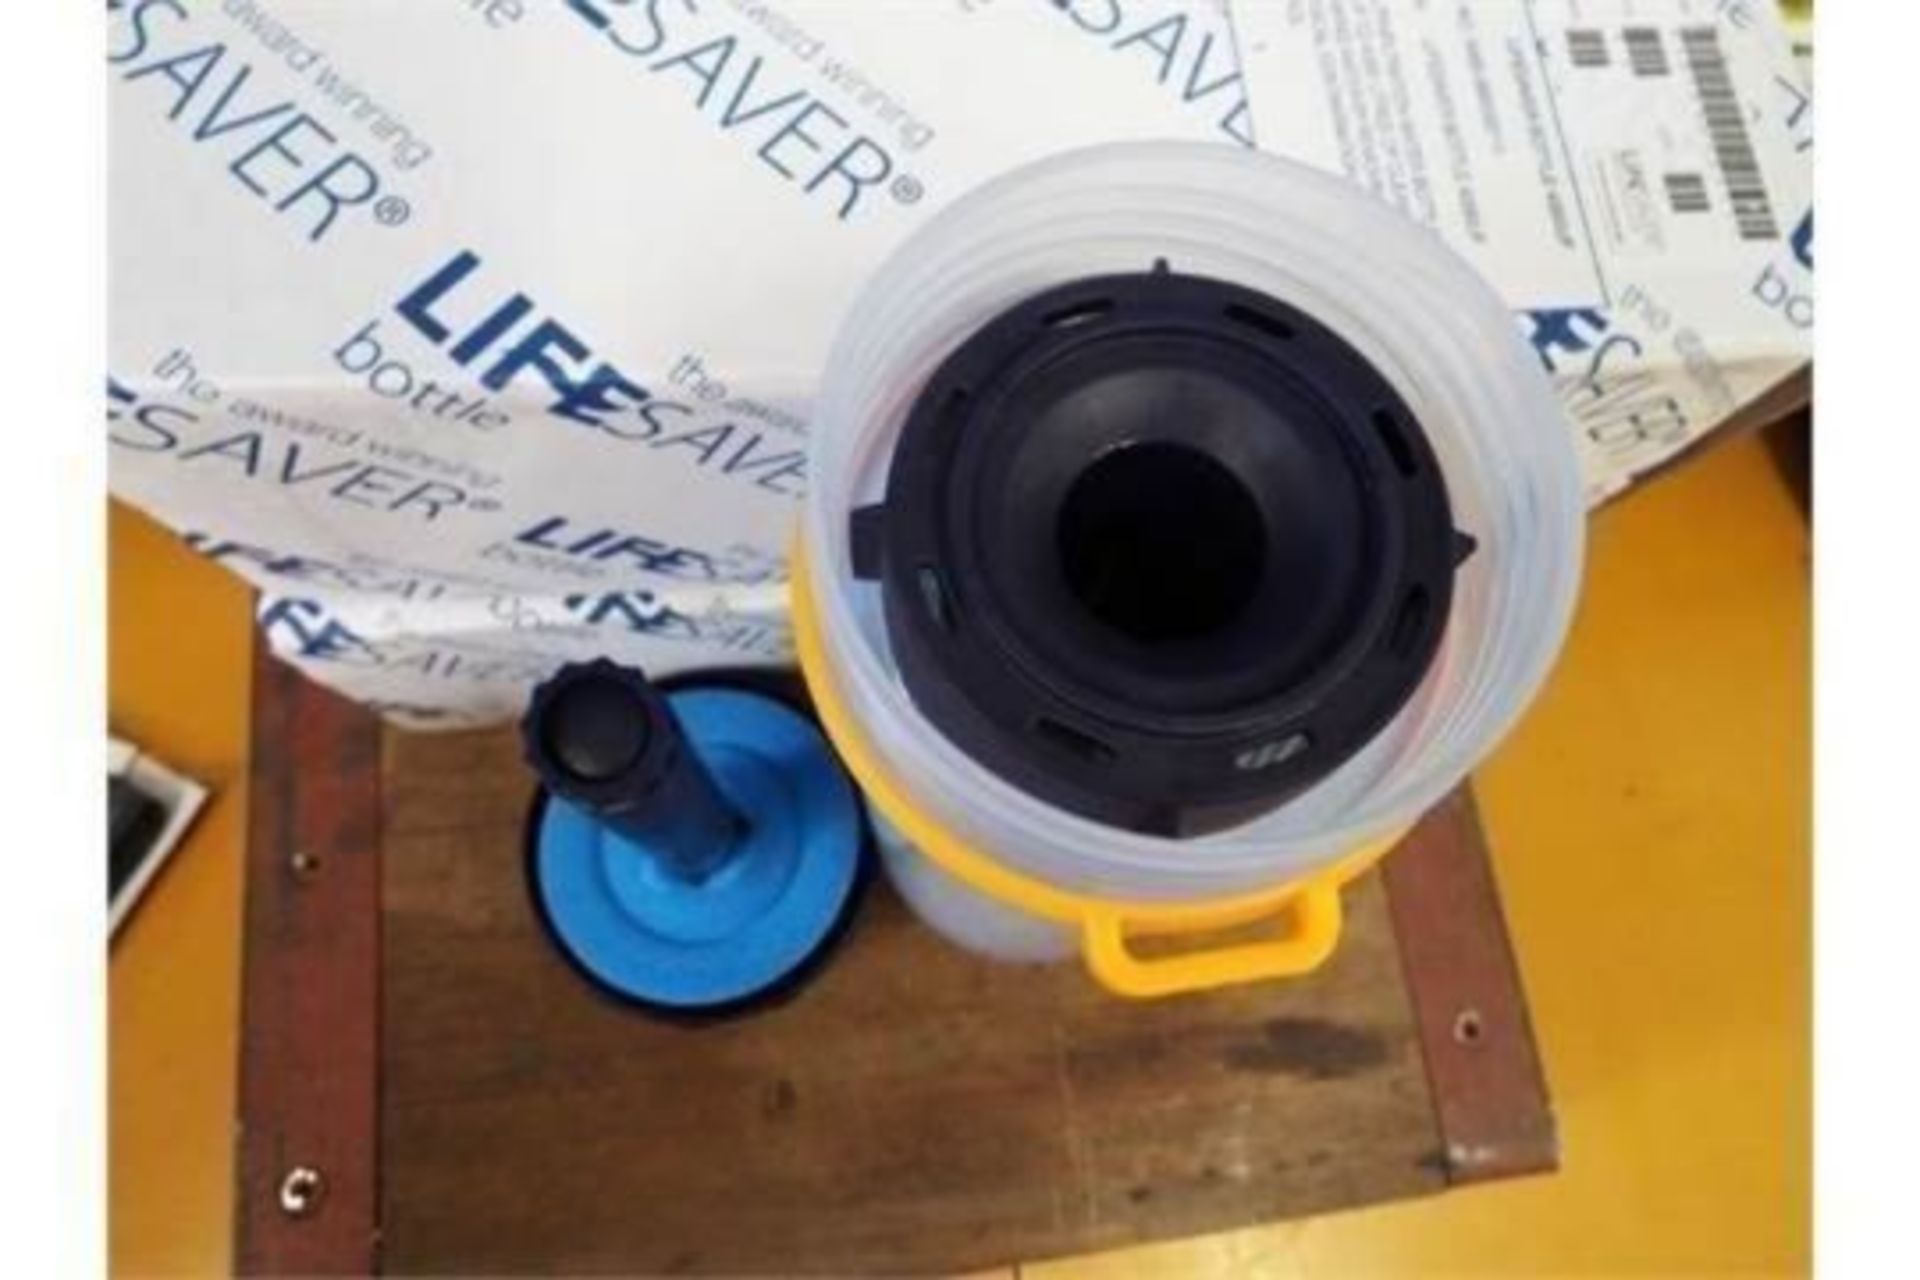 160 x Unissued lifesaver 4000UF ultra filtration water bottles - Image 7 of 9